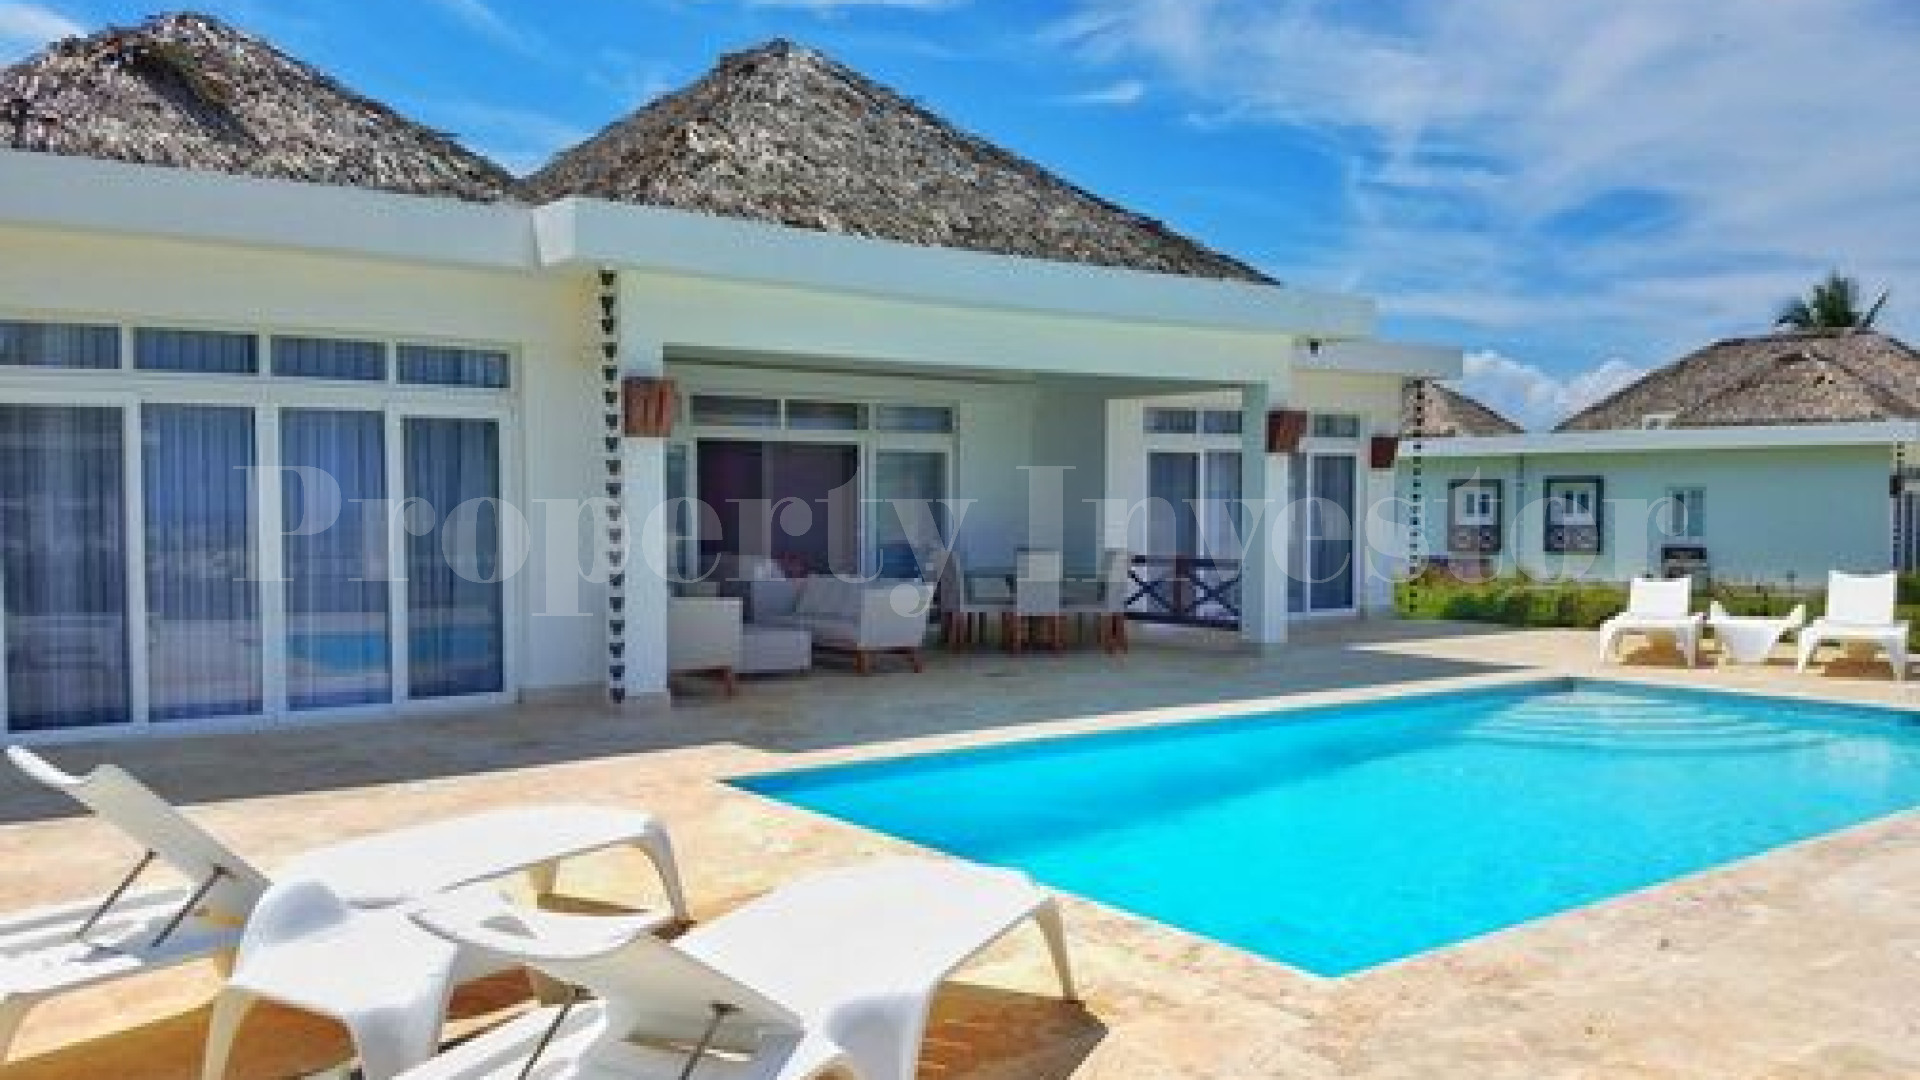 3 Bedroom Oceanview Villa in the Dominican Republic with 30 Year Financing (Villa 16)